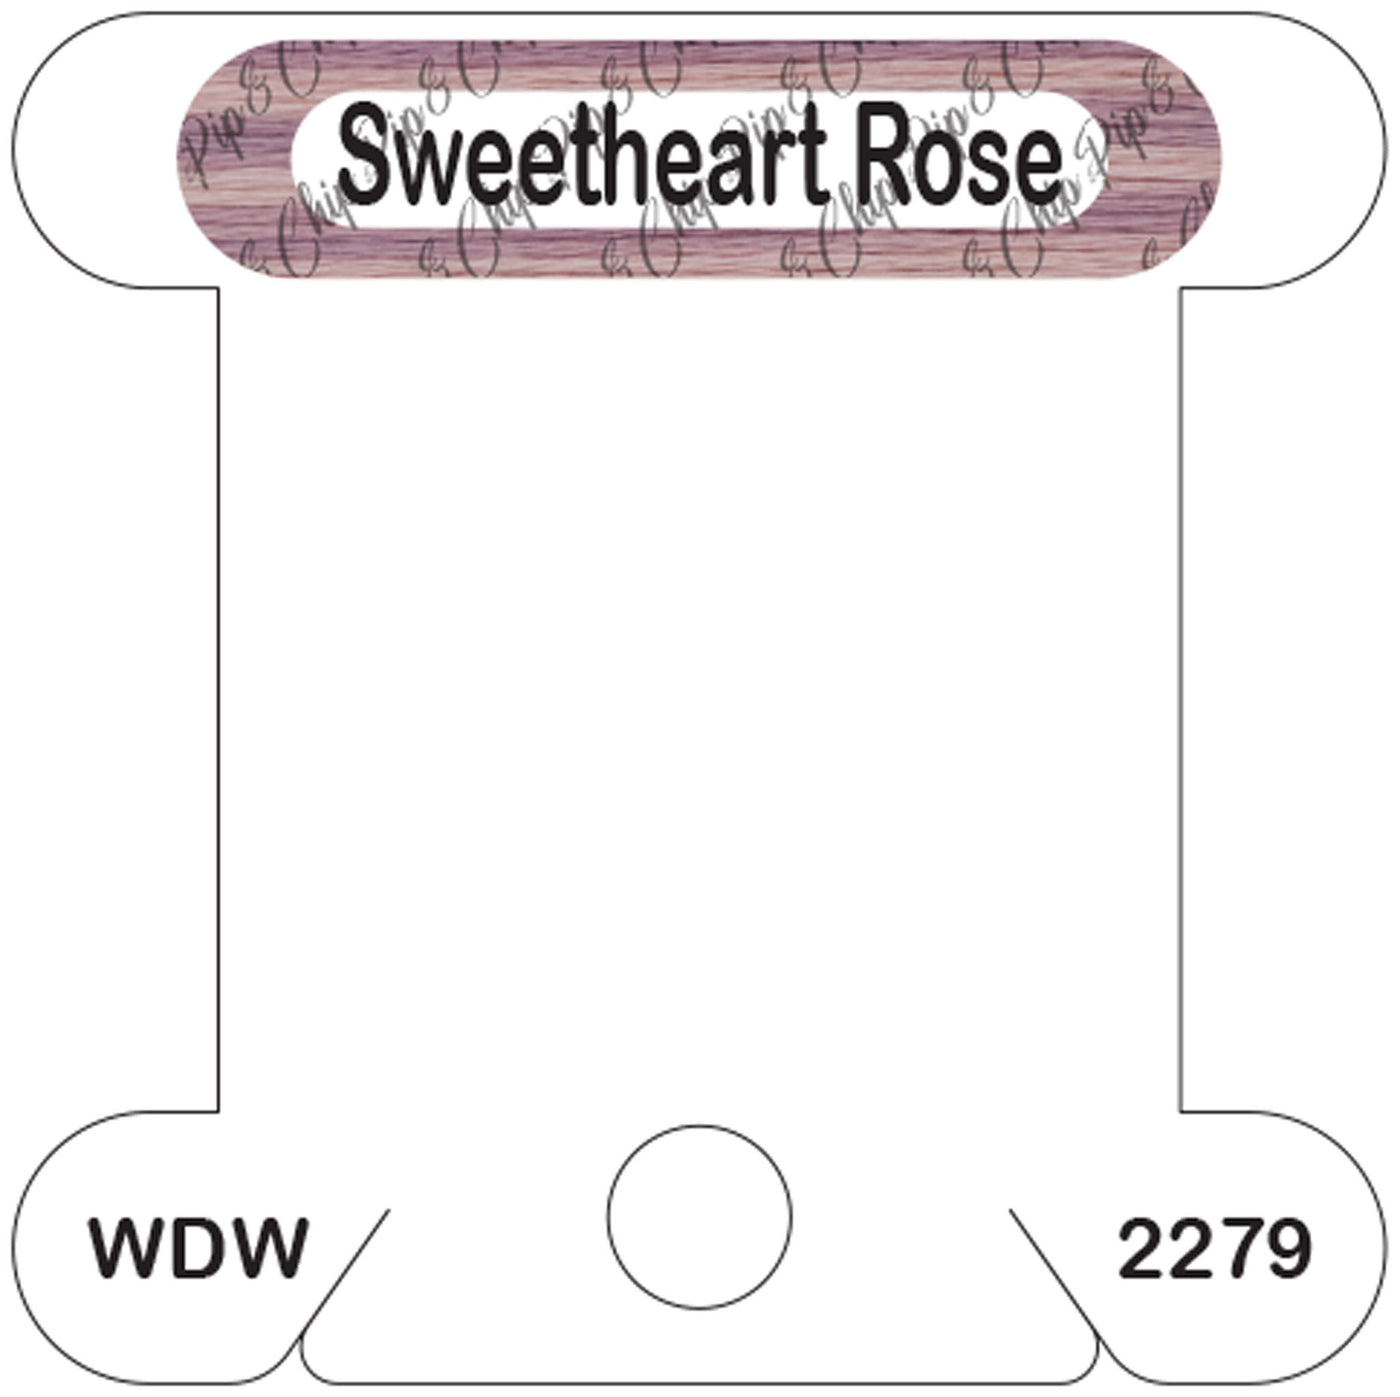 WDW Sweetheart Rose acrylic bobbin